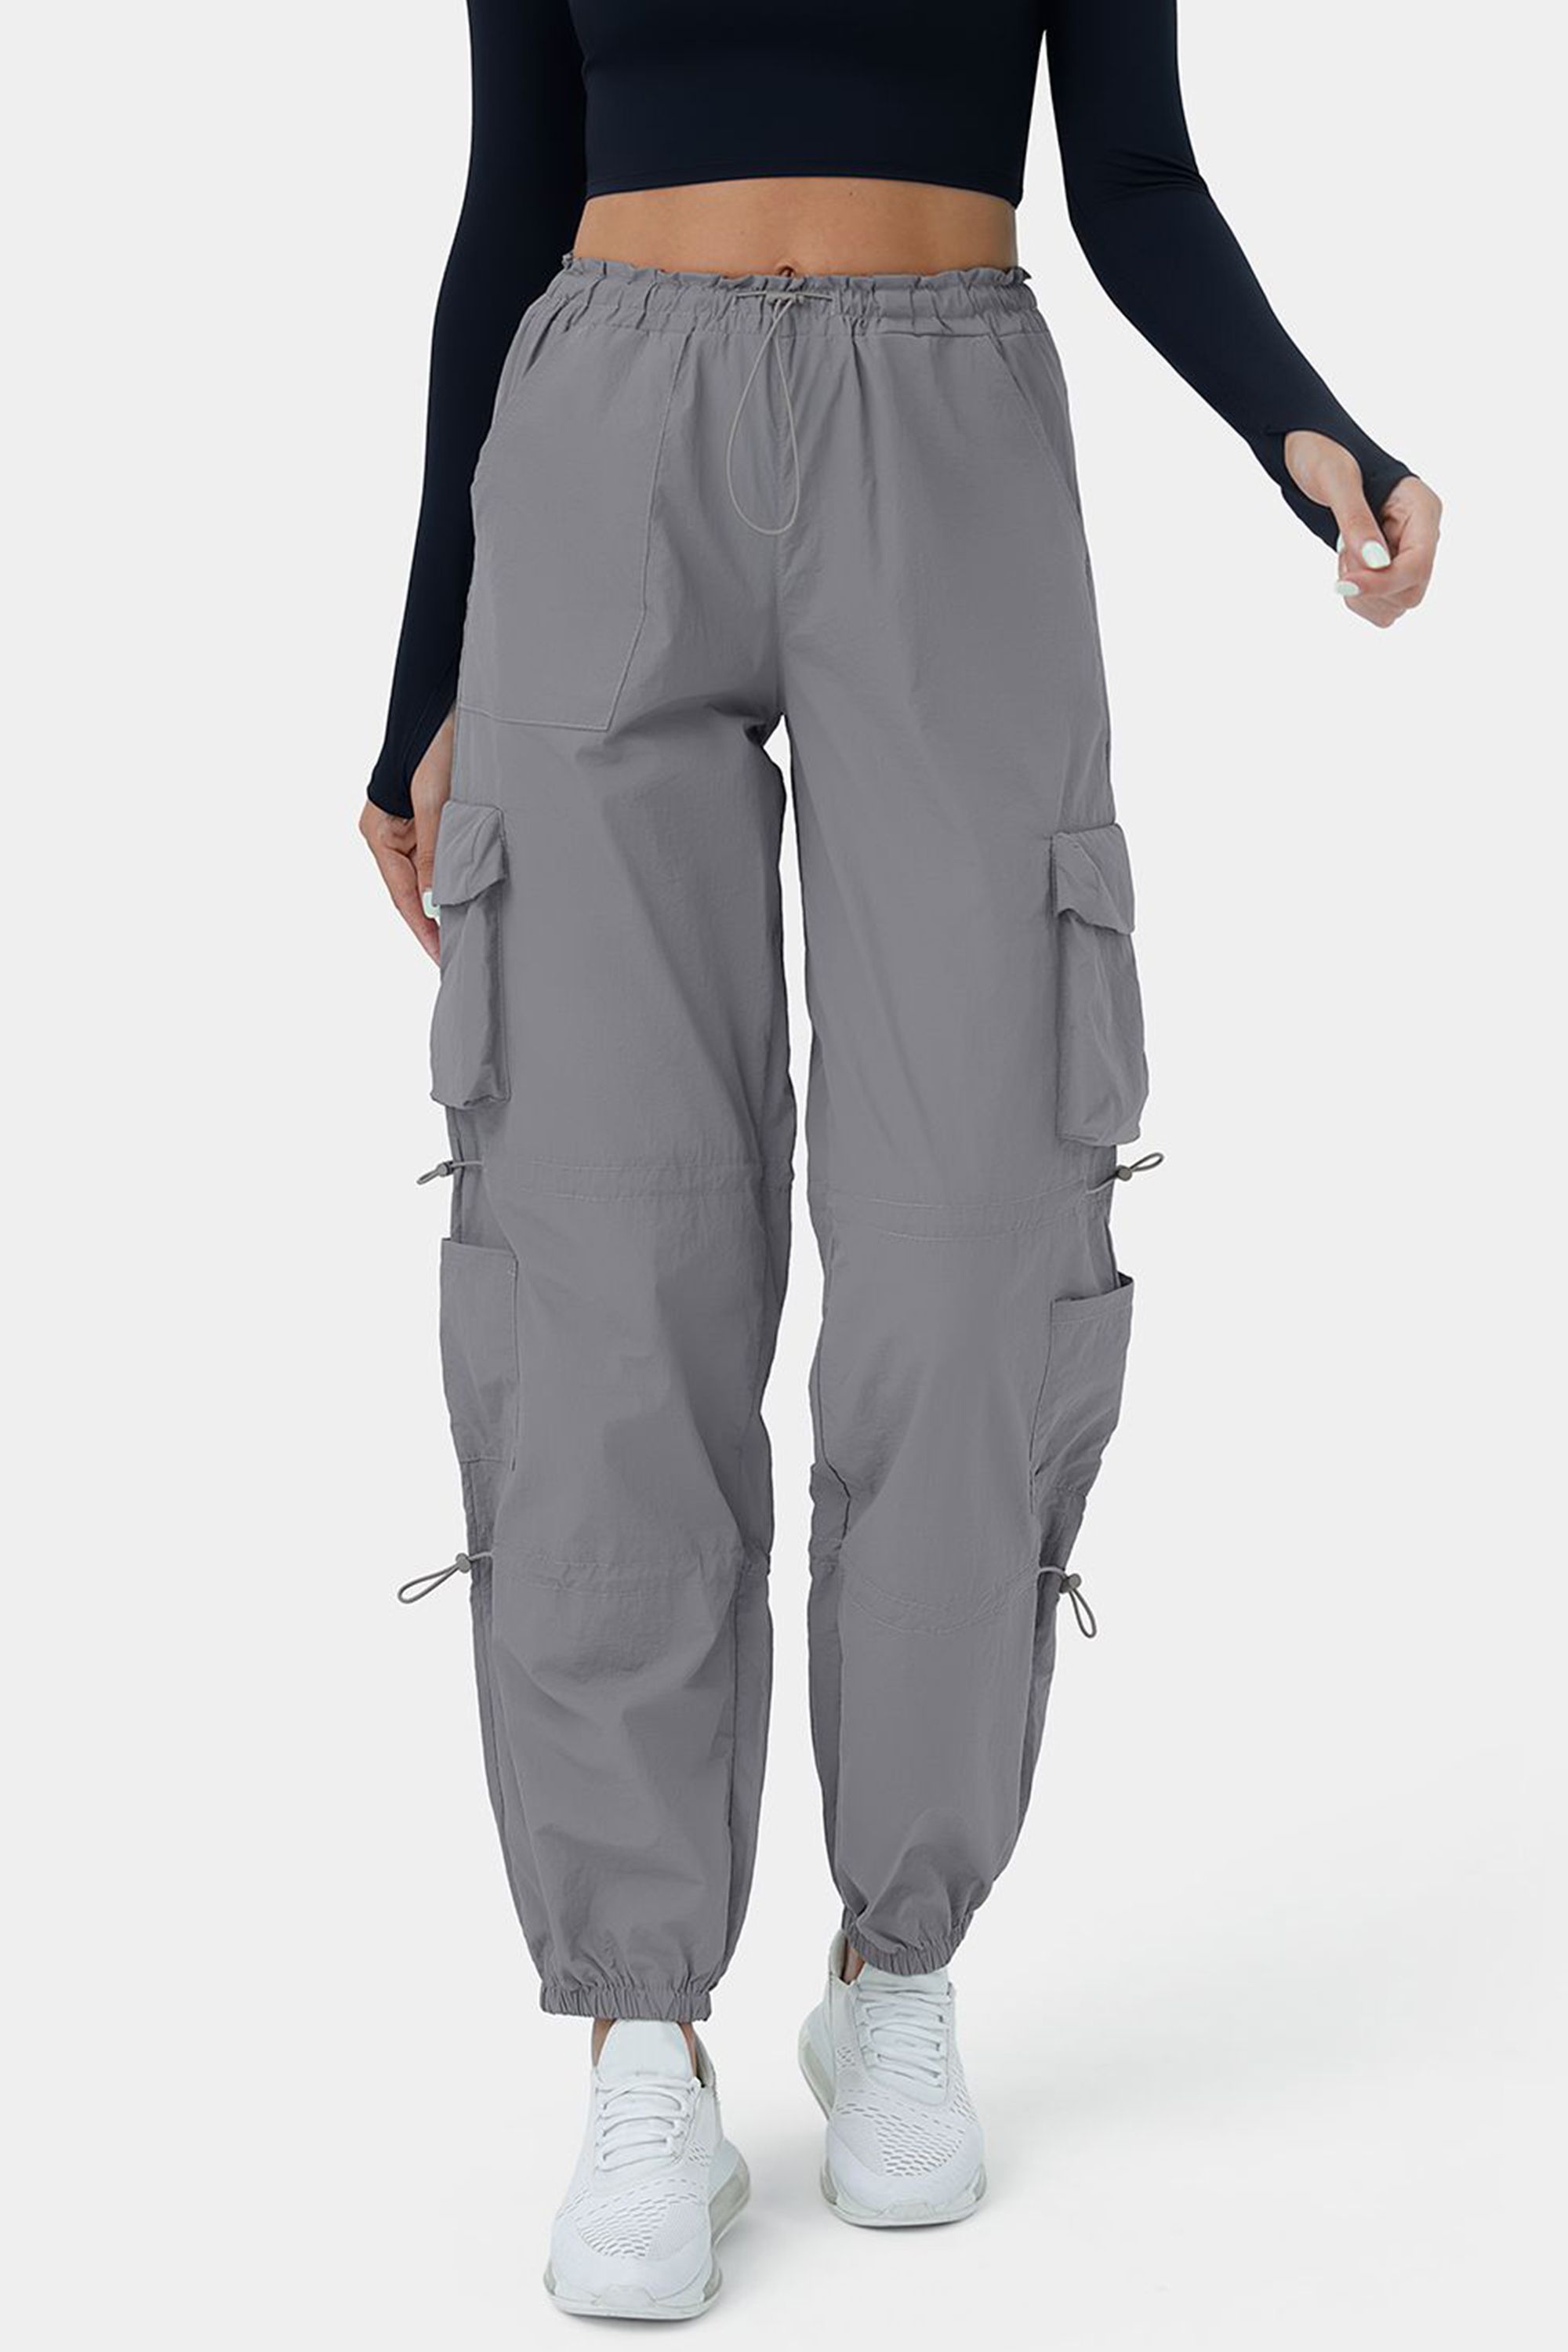 Plaid Printed Loose Flared Beauty Water Trendy Ripple Pants Pants  Women's Pants | eBay